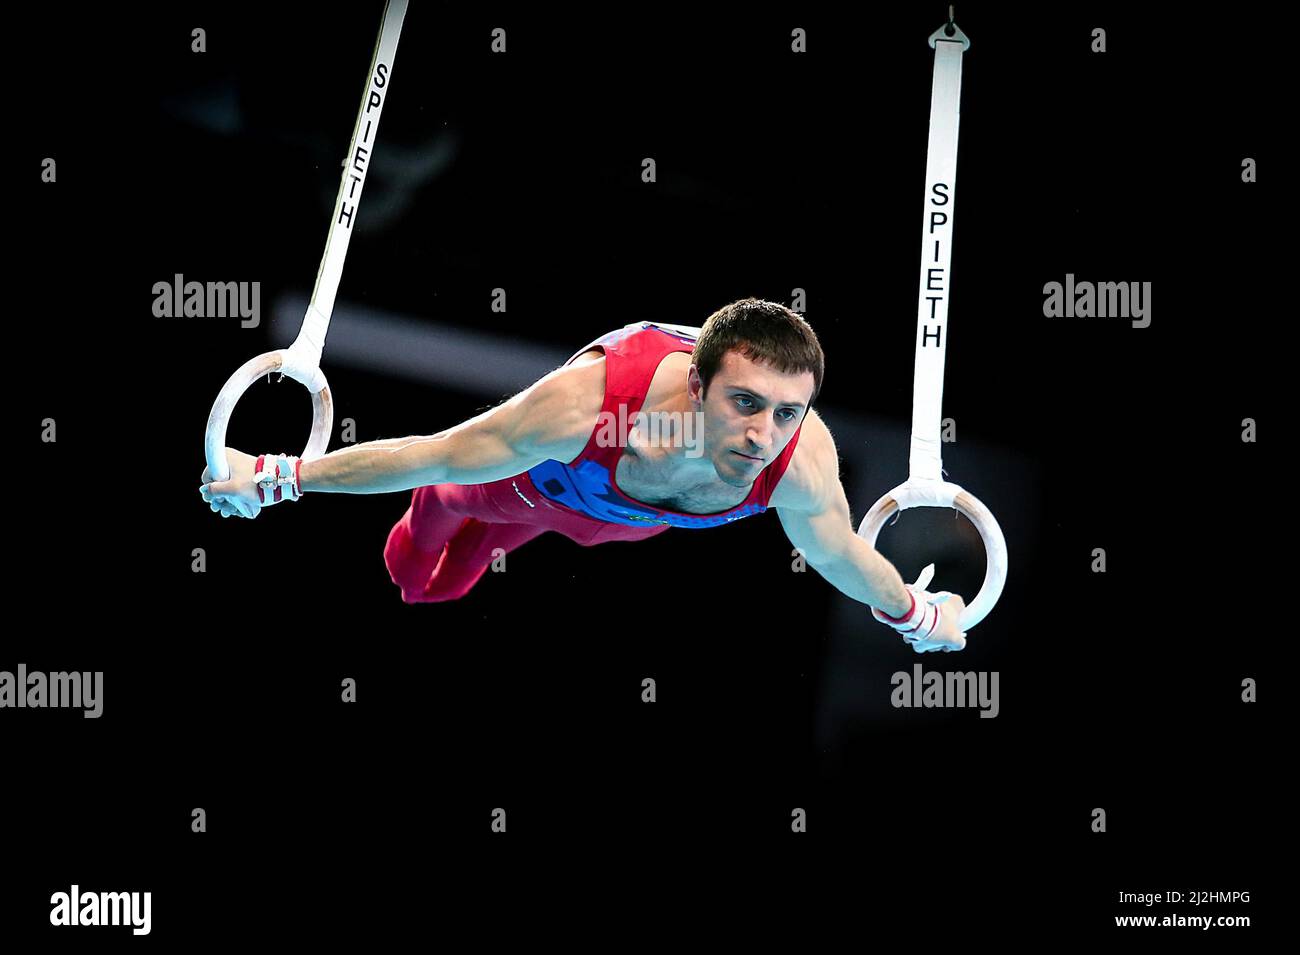 Szczecin, Poland, April 10, 2019: Artur Davtyan of Armenia competes on the rings during the European artistic gymnastics championships Stock Photo